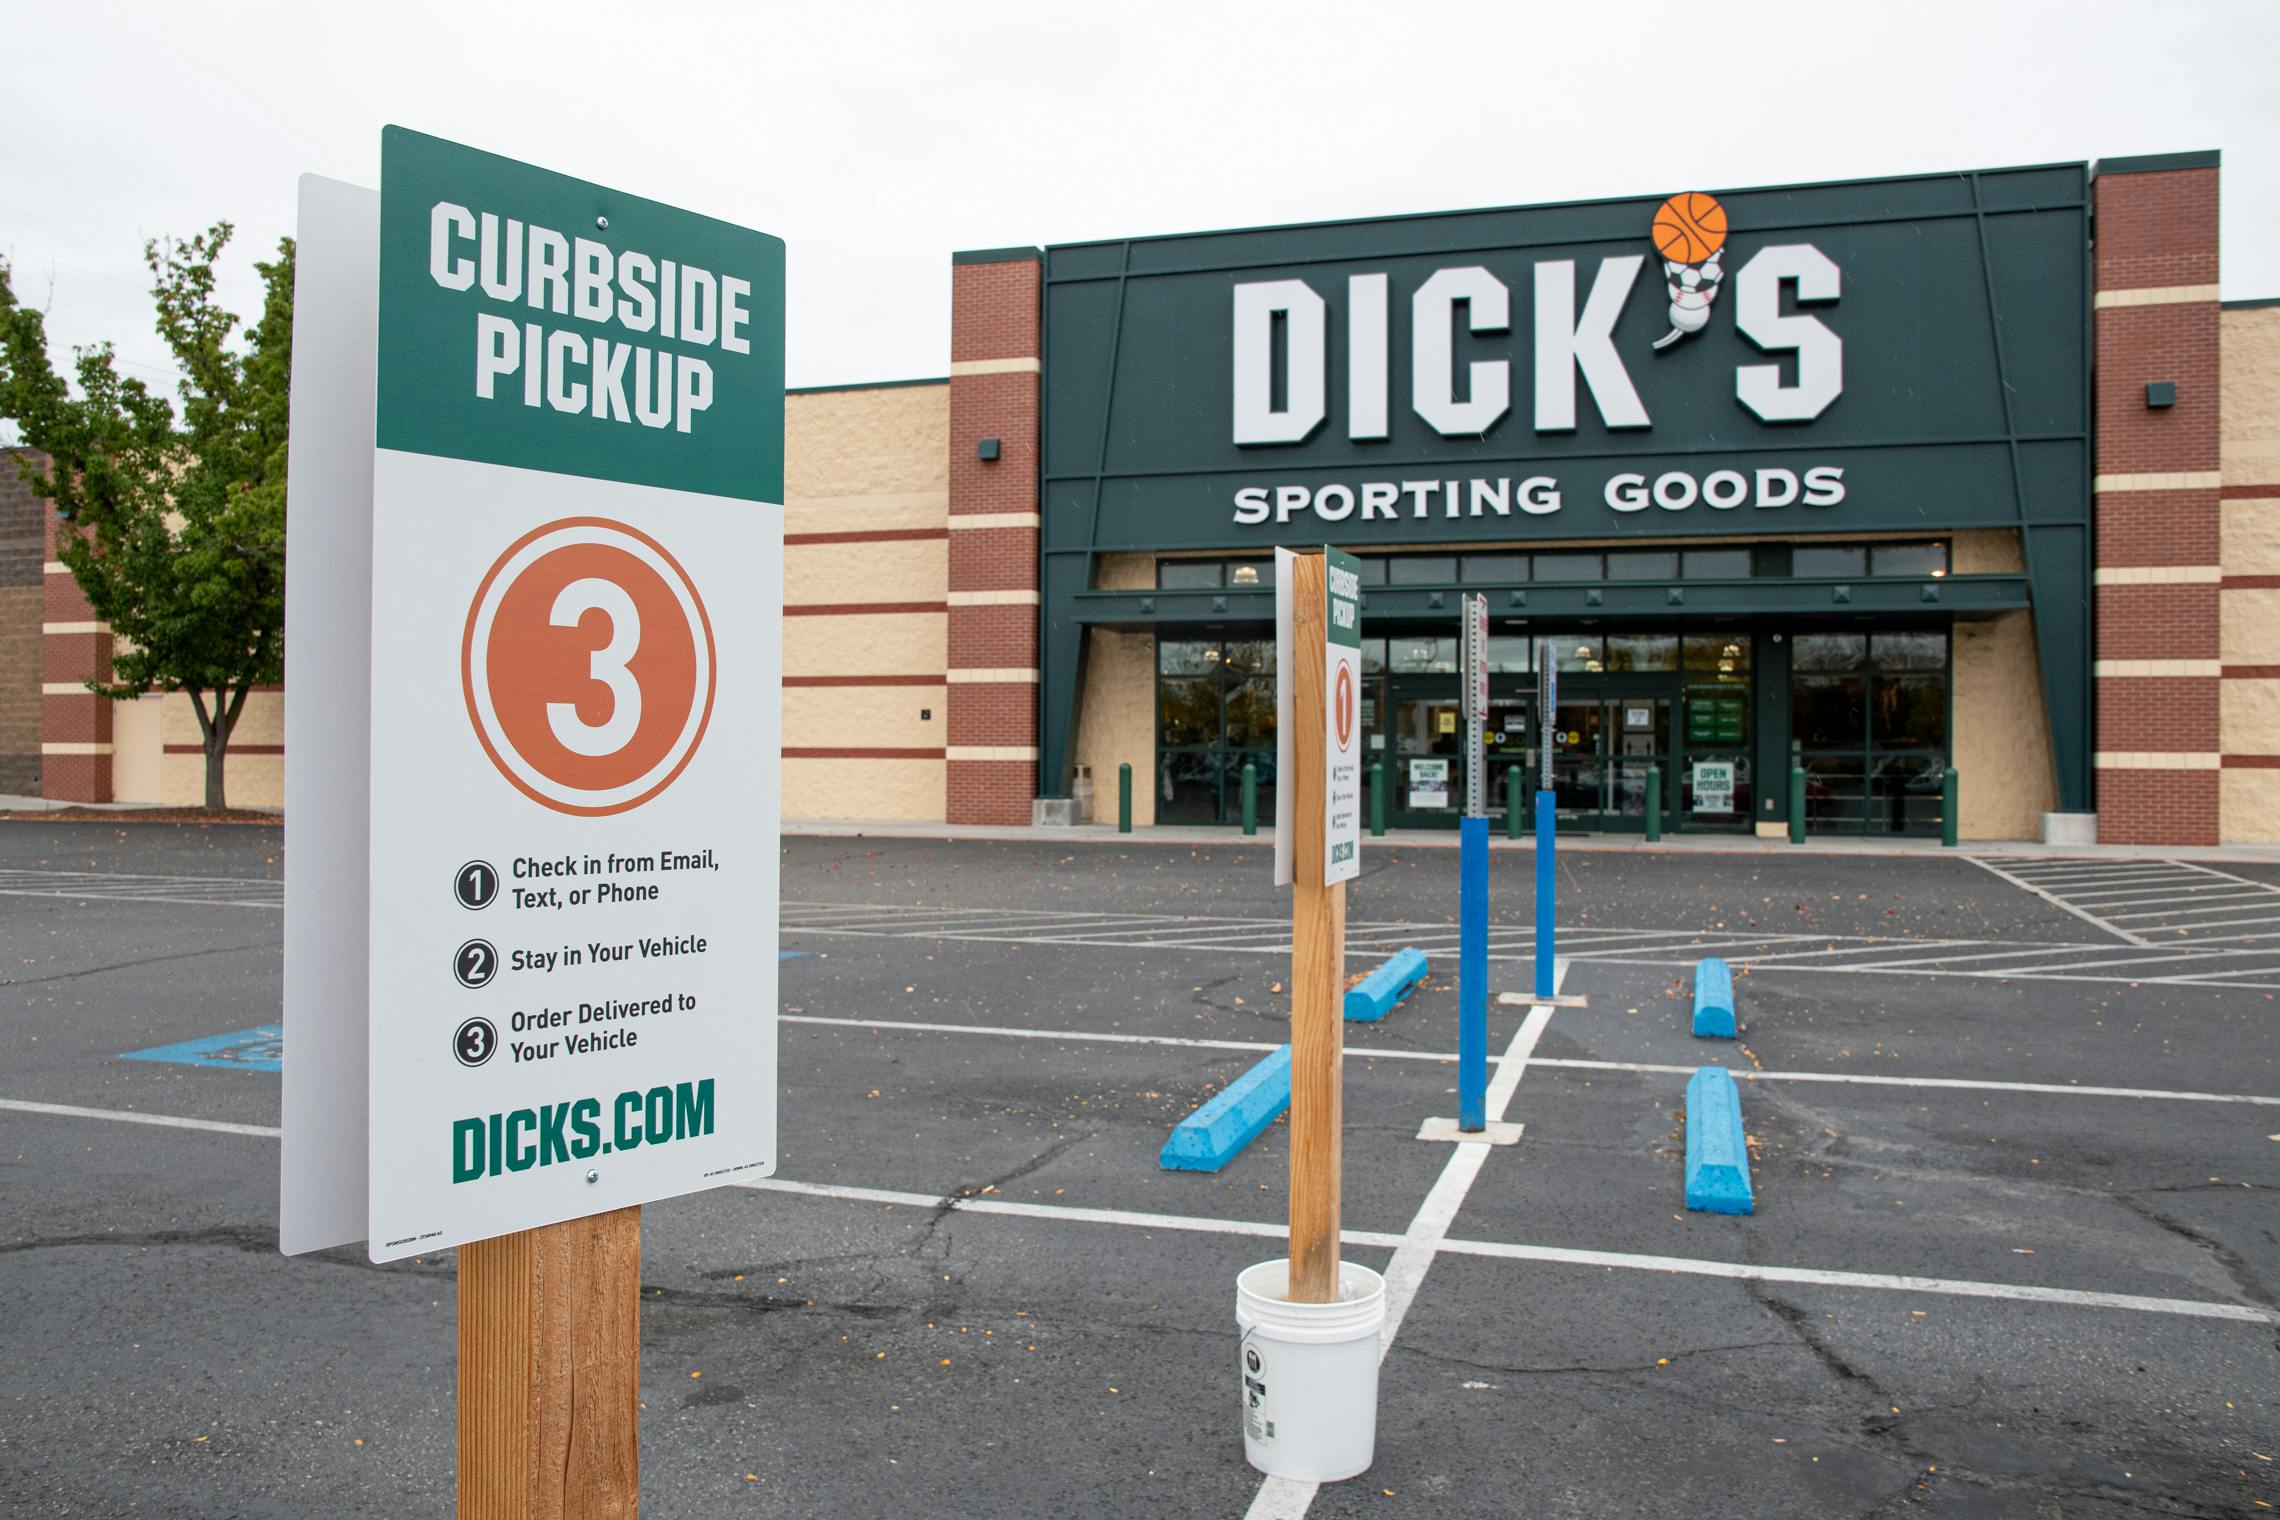 South Carolina Gamecocks Jerseys  Curbside Pickup Available at DICK'S